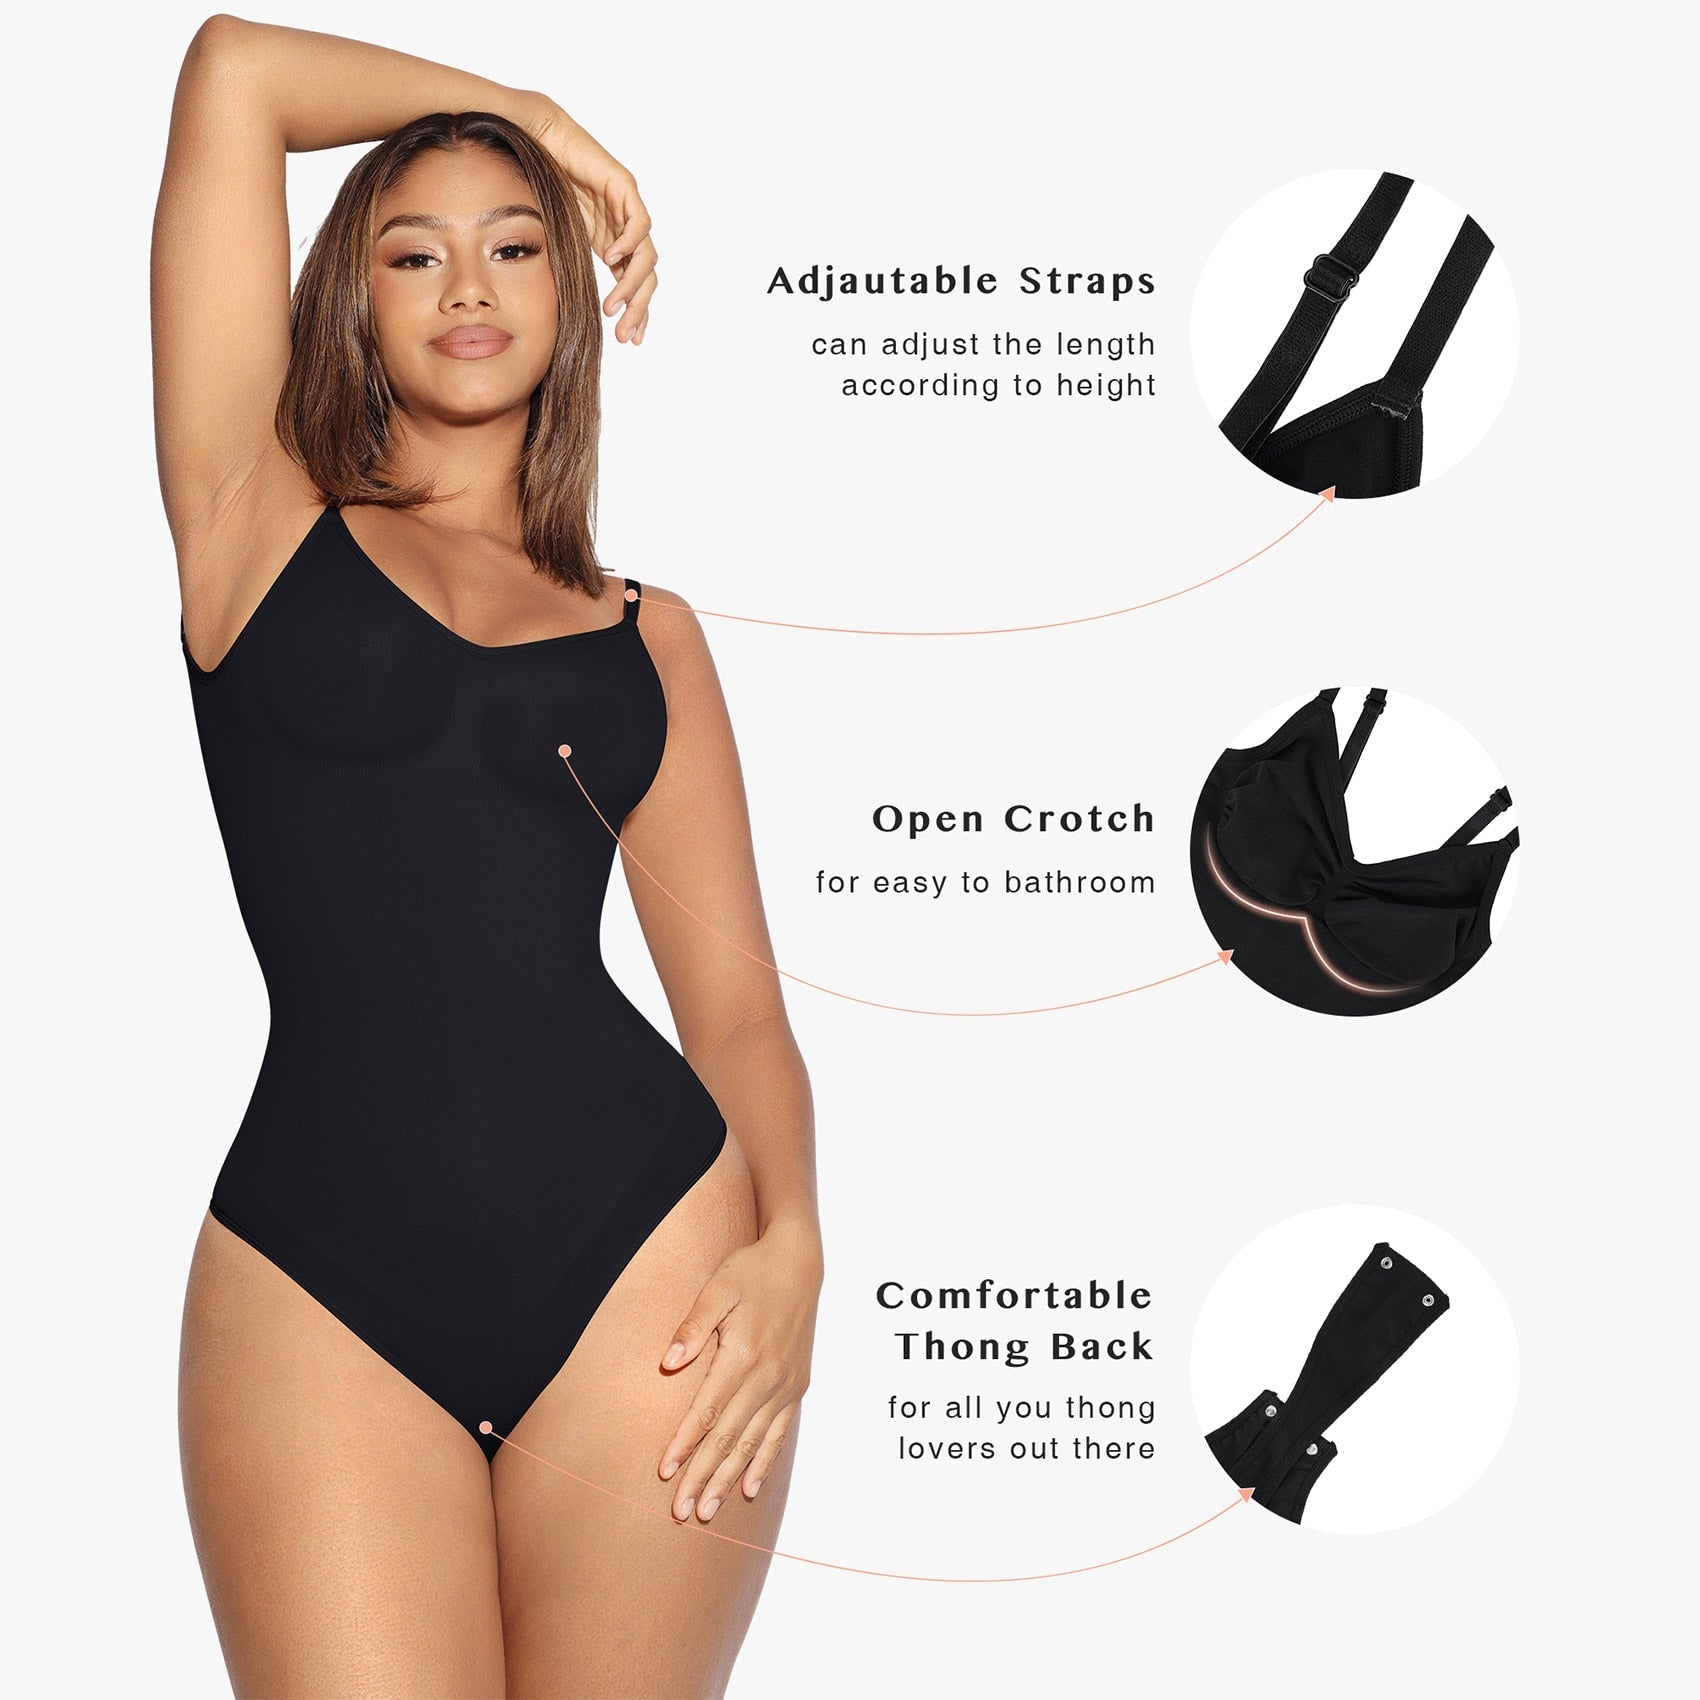 Cheekee™ Contour Ultra Comfy Bodysuit 🔥